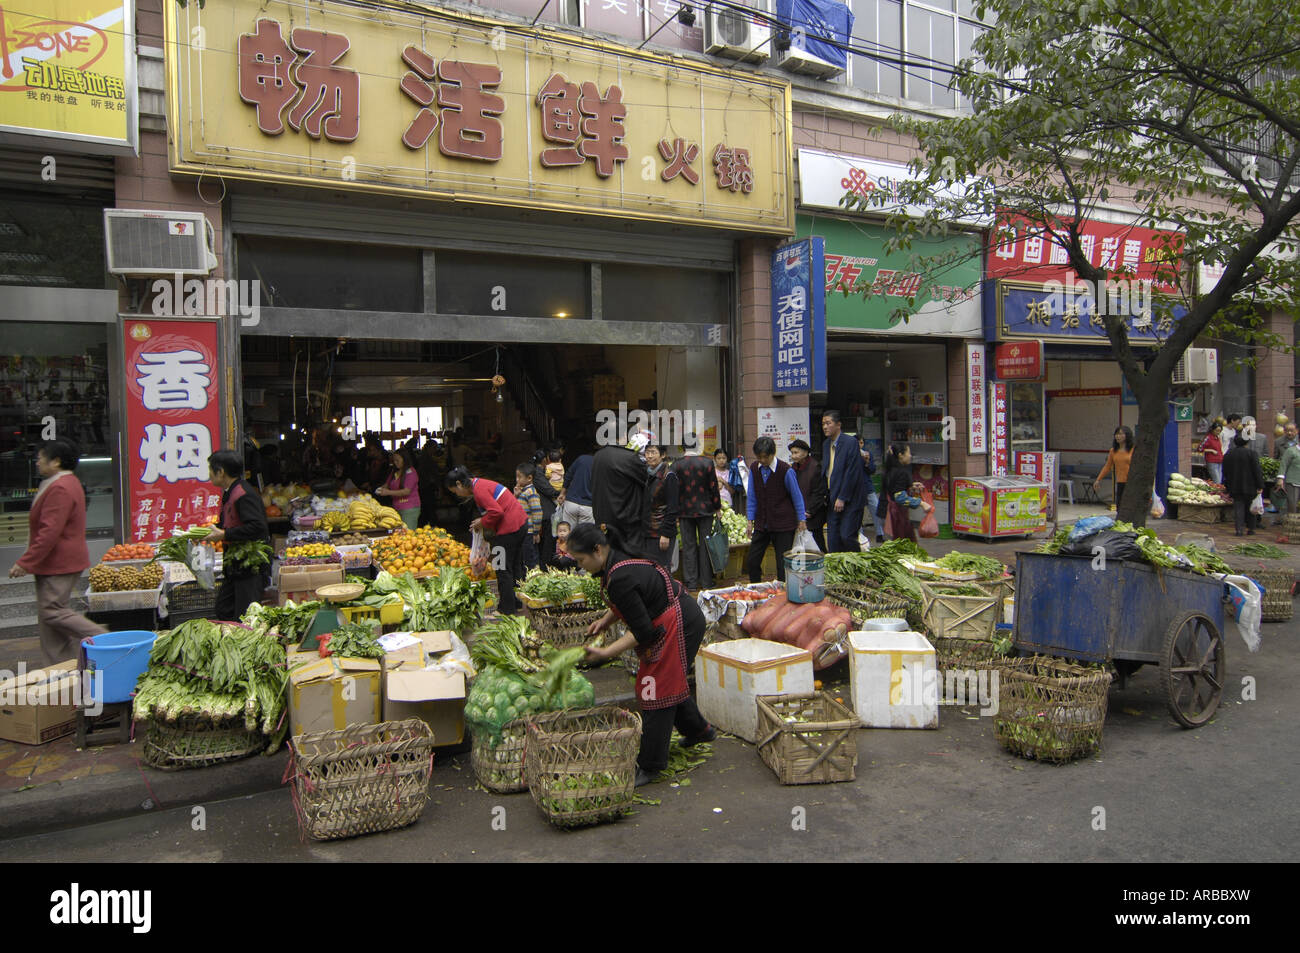 Geographie/Reisen, China, Chongqing, street scene, Gemüse stehen auf der Straße, Additional-Rights - Clearance-Info - Not-Available Stockfoto